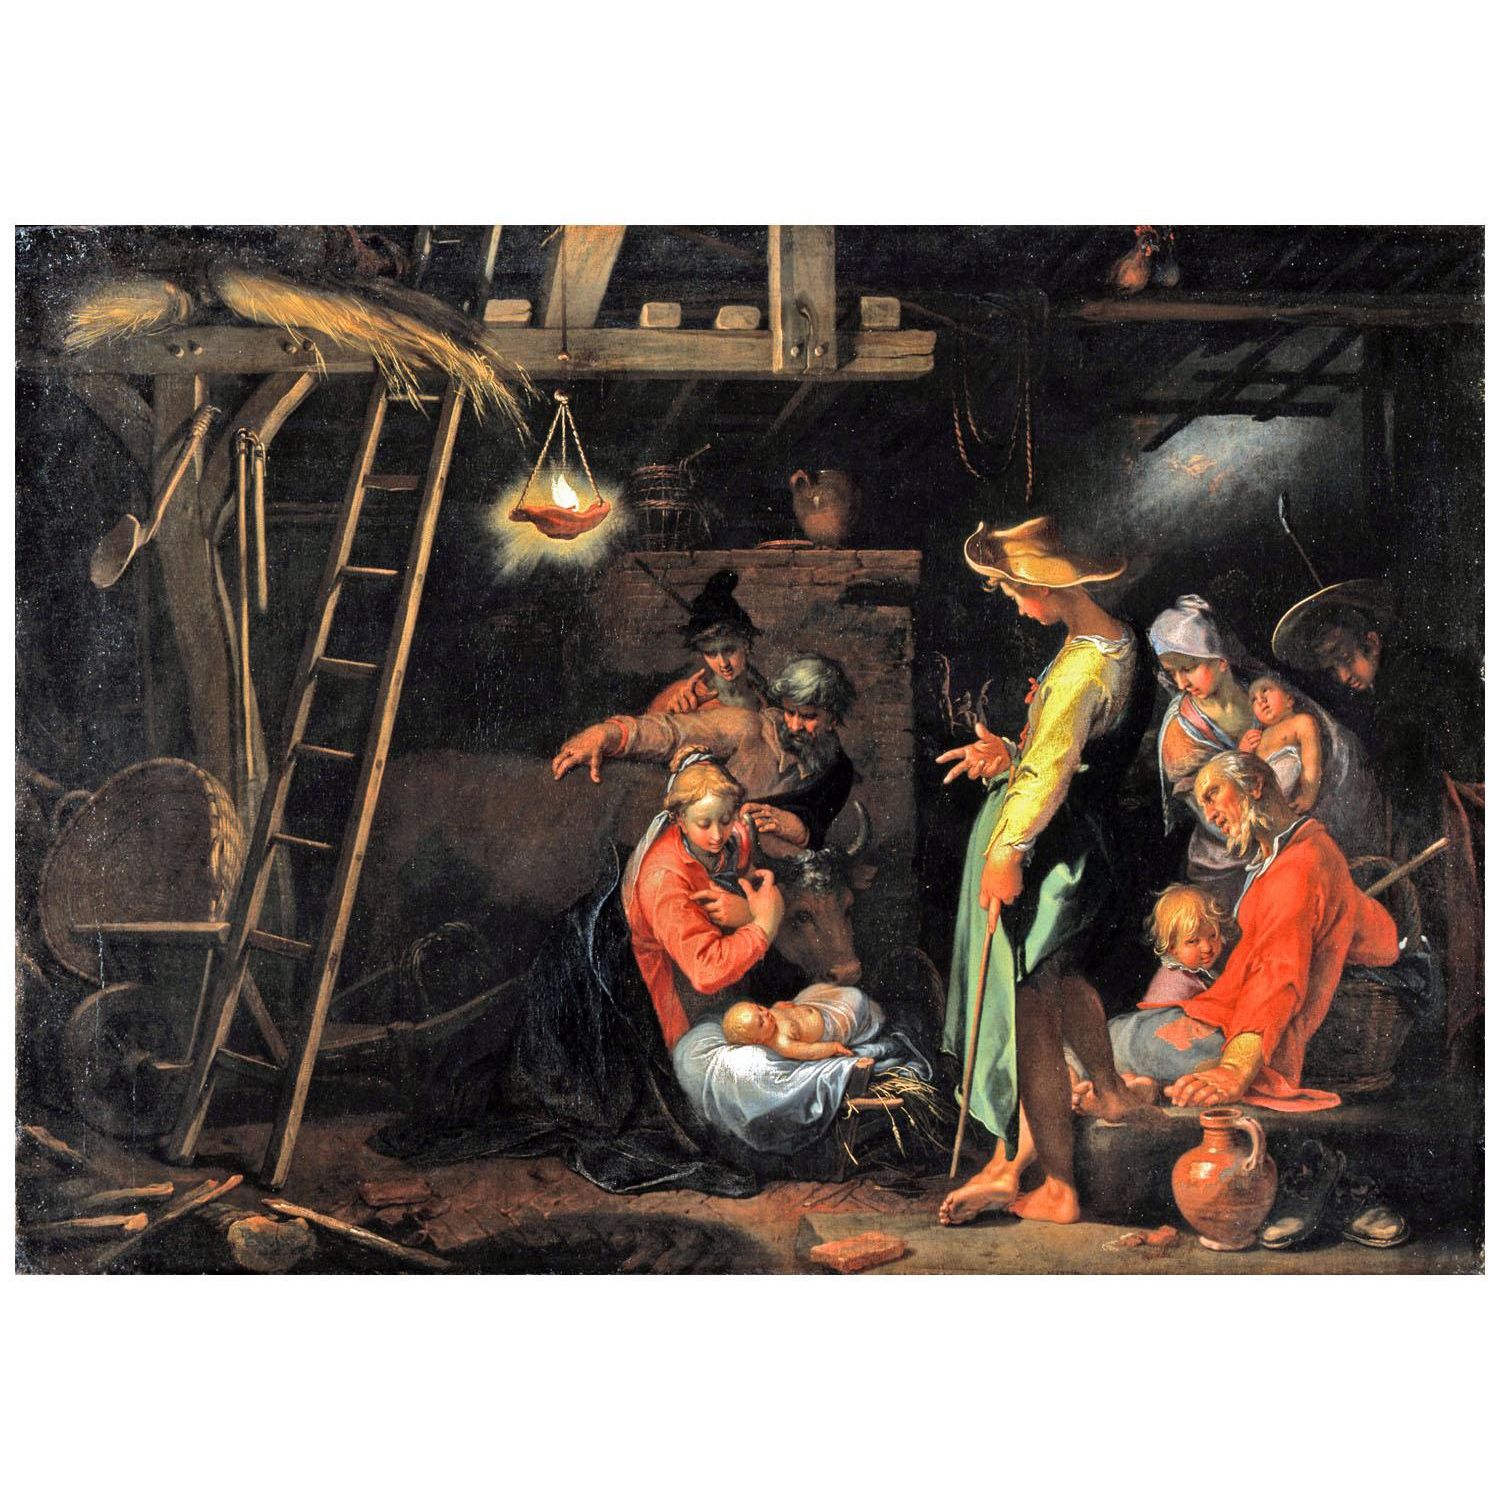 Abraham Bloemaerts. The Adoration of the Shepherds. 1605. Gemaldegalerie Berlin